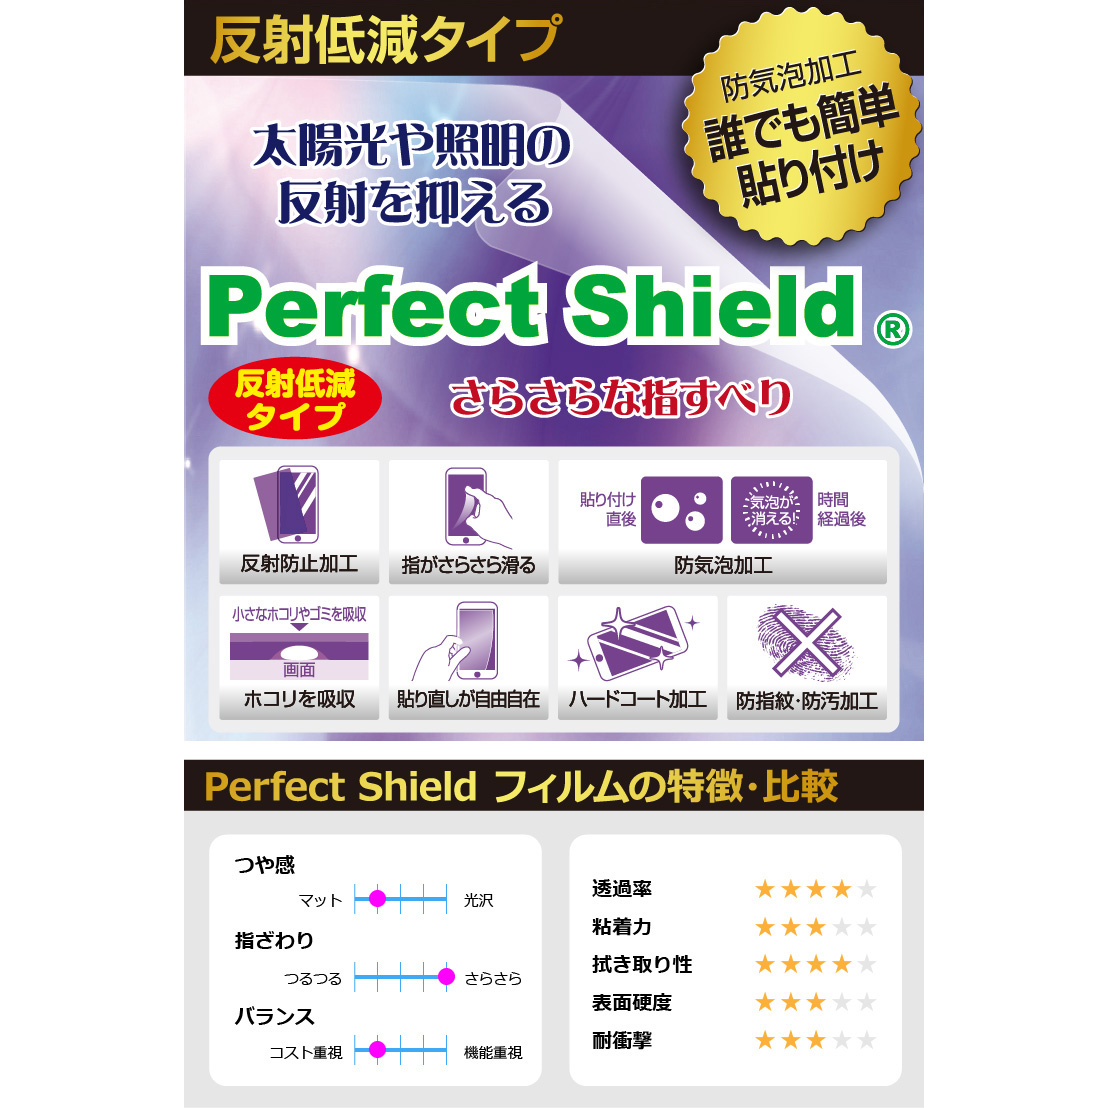 ASUS Chromebook CM30 Detachable (CM3001) 対応 Perfect Shield 保護 フィルム [画面用] 反射低減 防指紋 日本製